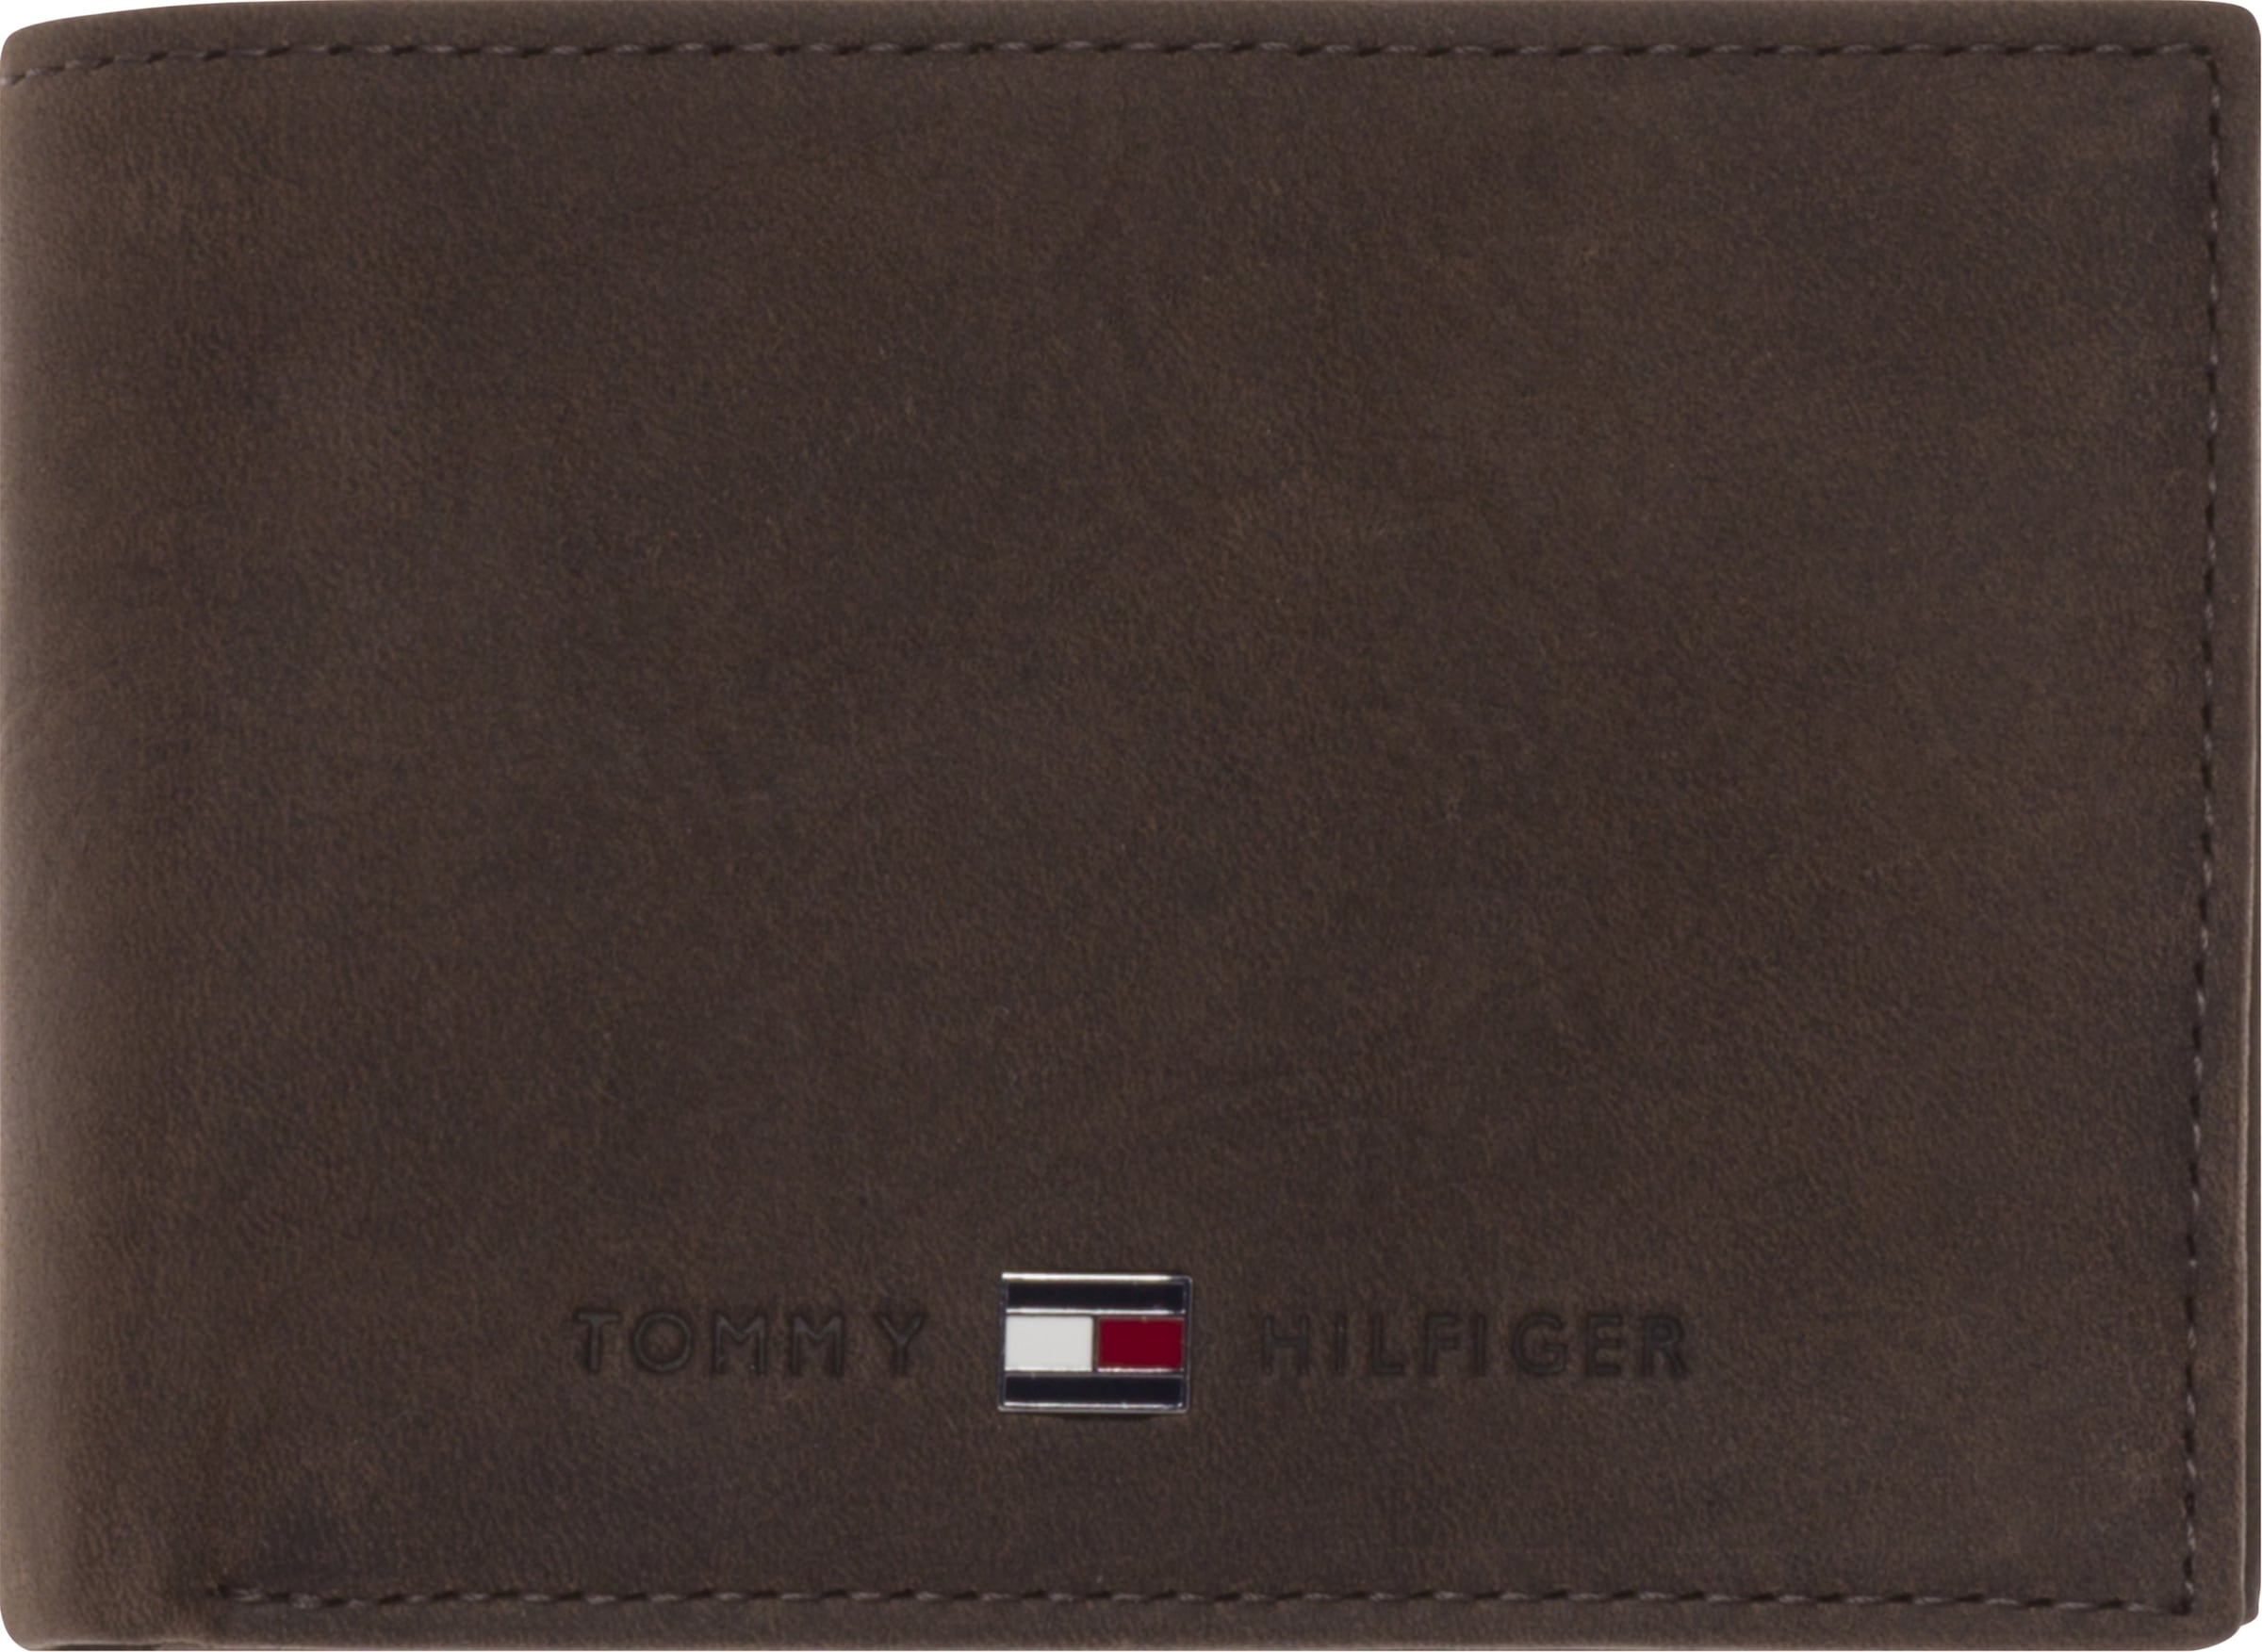 Tommy Hilfiger Geldbörse »JOHNSON MINI CC FLAP COIN POCKET«, aus hochwertigem Leder